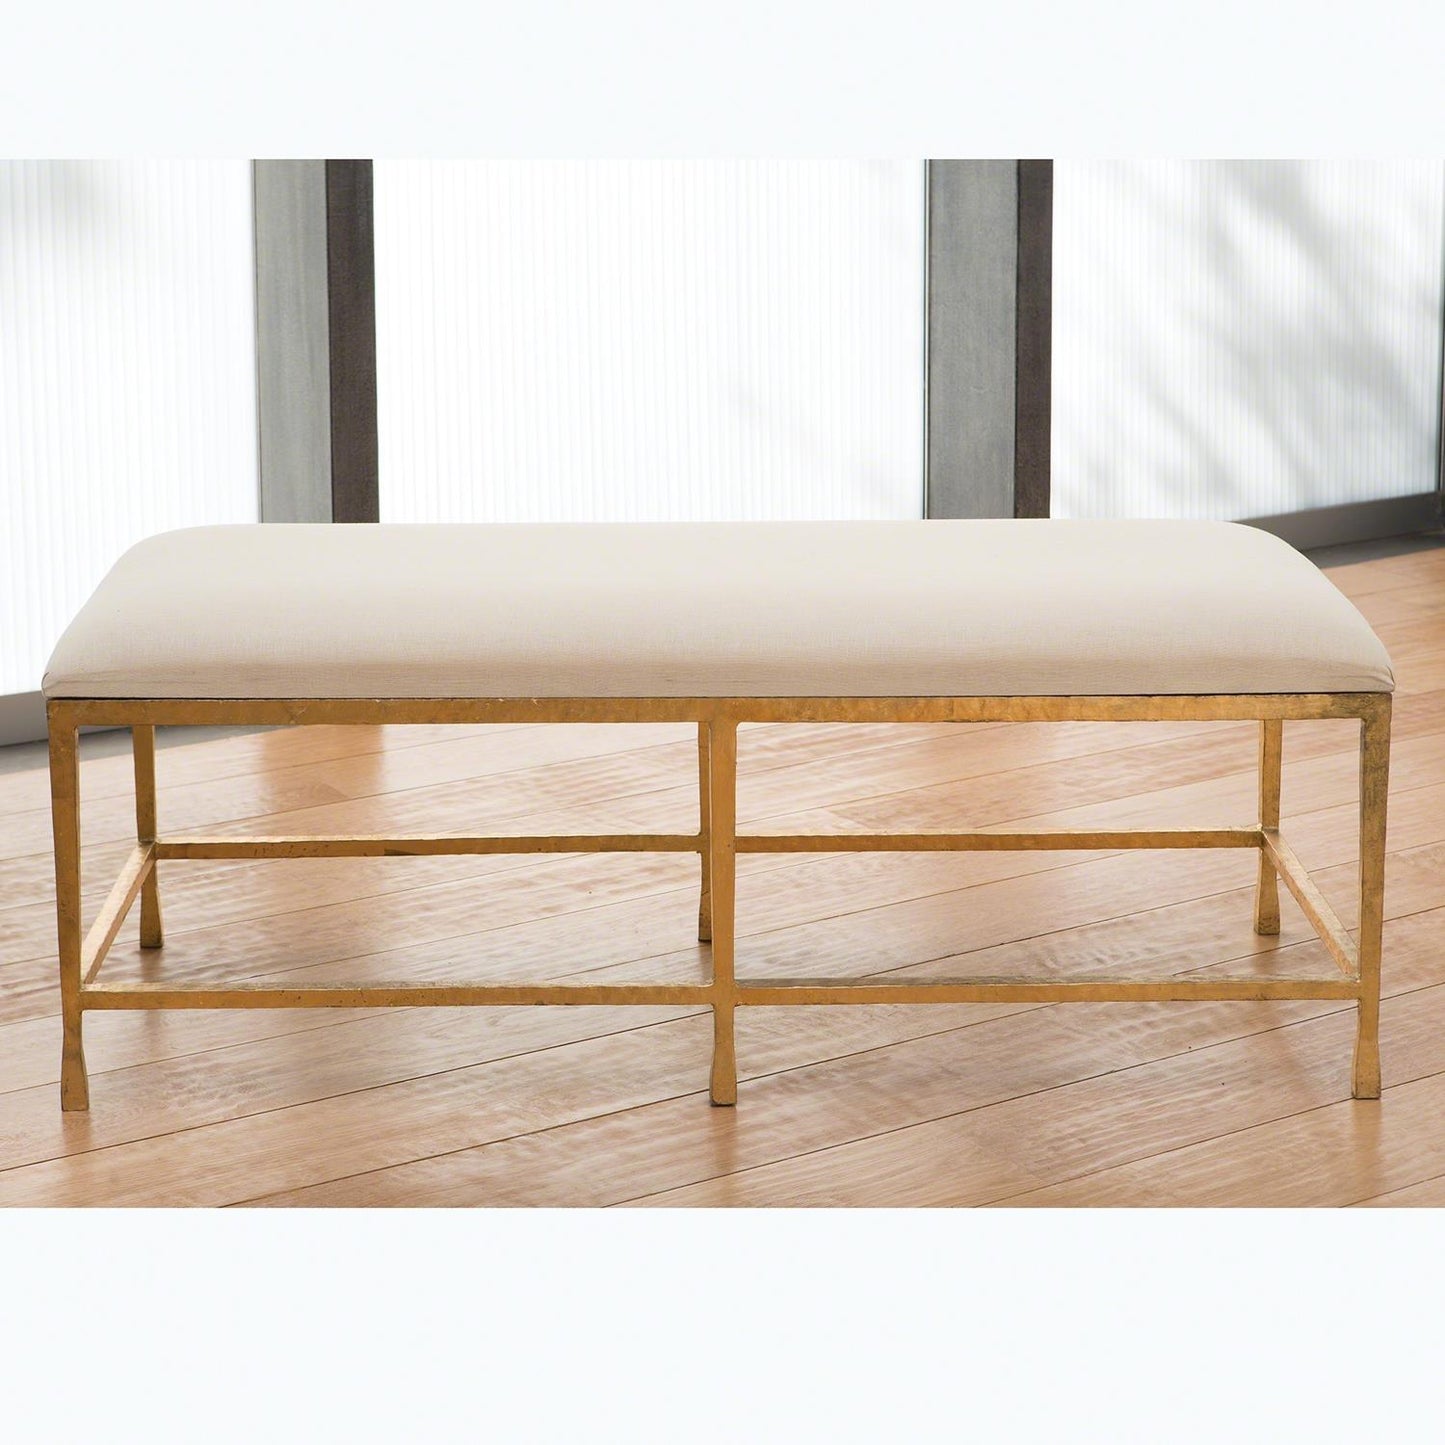 Quad Pod Bench w/Muslin Cushion - Gold Leaf - Grats Decor Interior Design & Build Inc.